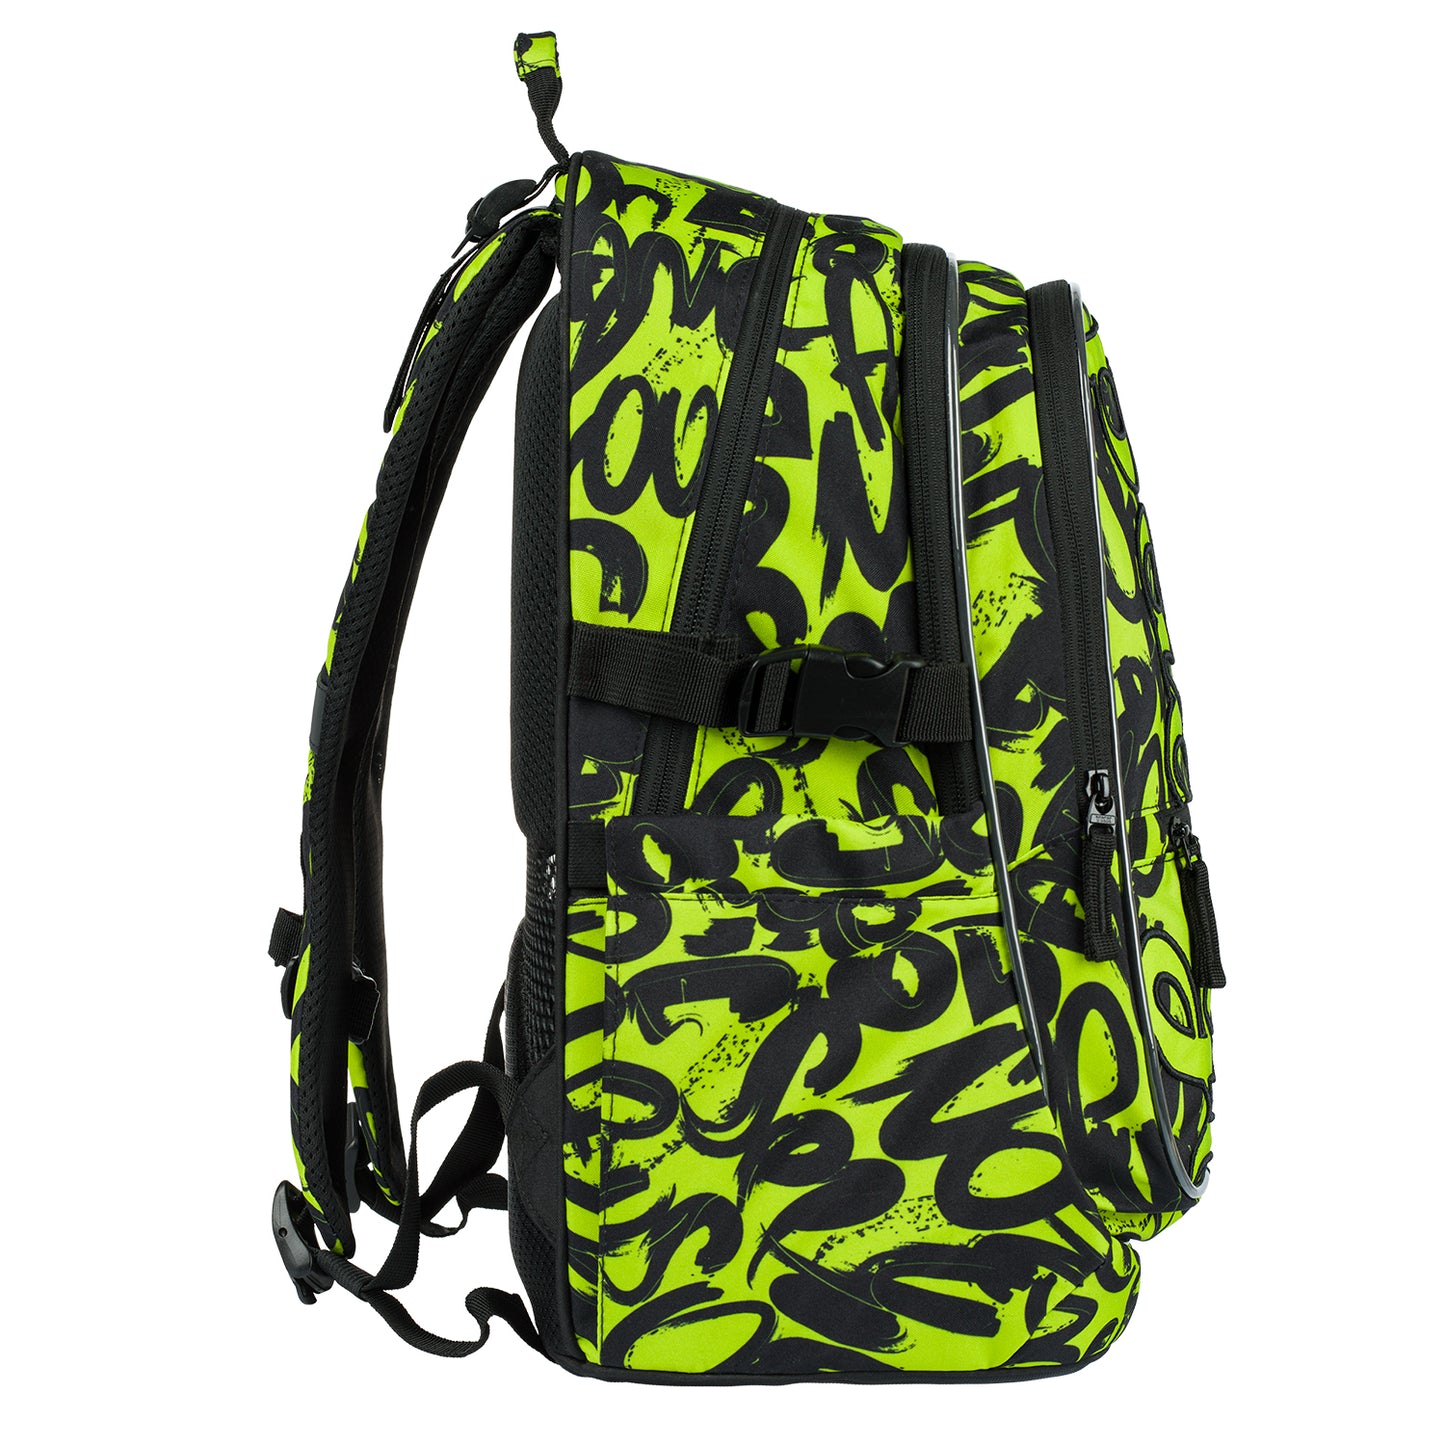 Školský batoh Core Lime